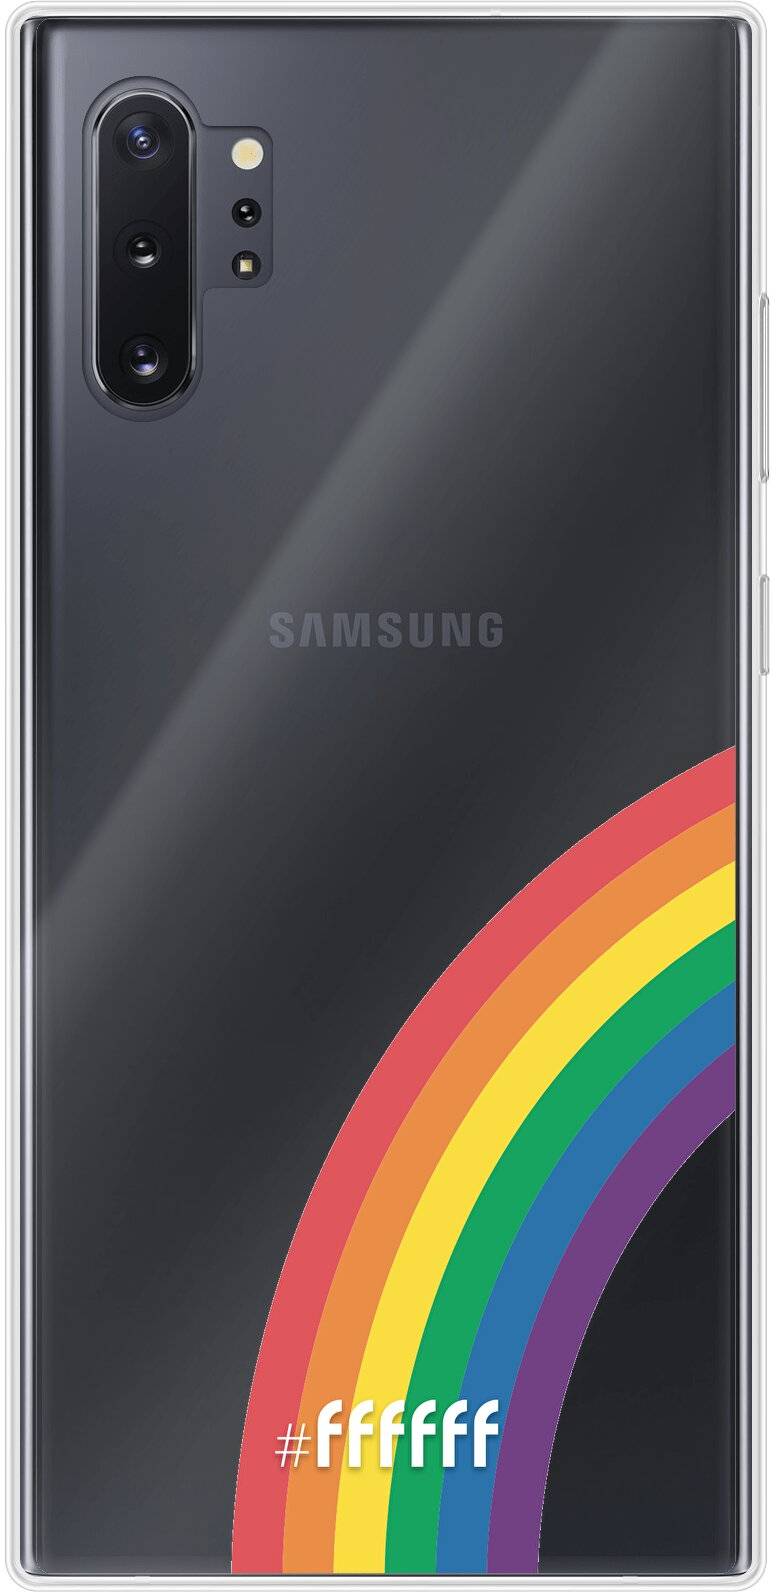 #LGBT - Rainbow Galaxy Note 10 Plus